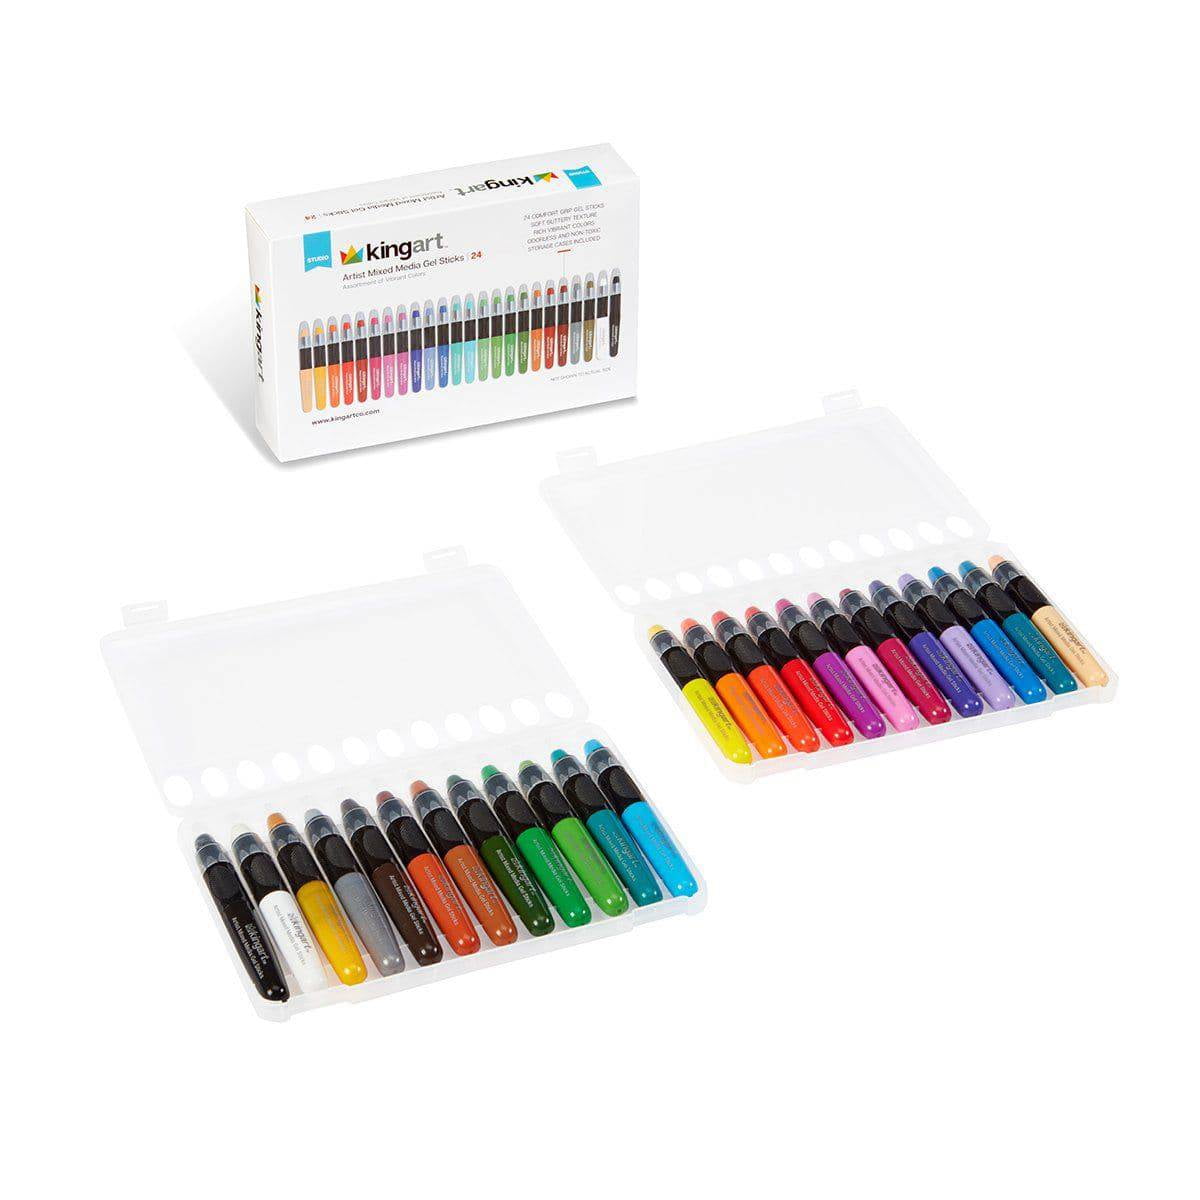 Color Swell Bulk Crayons - 40 Packs 24 Crayons per Pack (960 Crayons Total)  - Bulk Crayons 